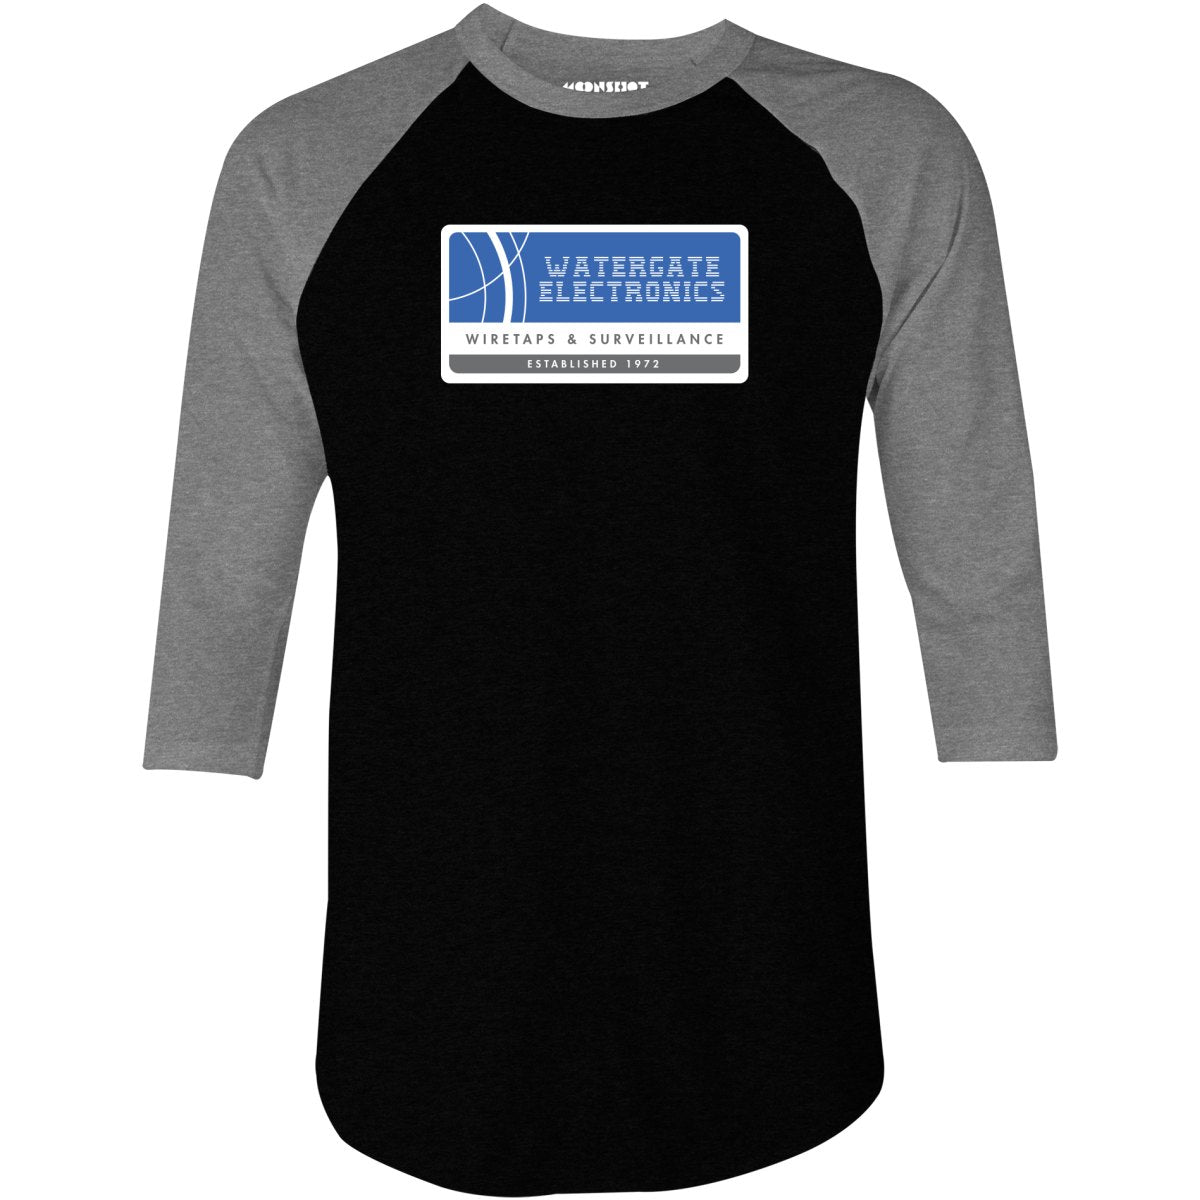 Watergate Electronics - 3/4 Sleeve Raglan T-Shirt